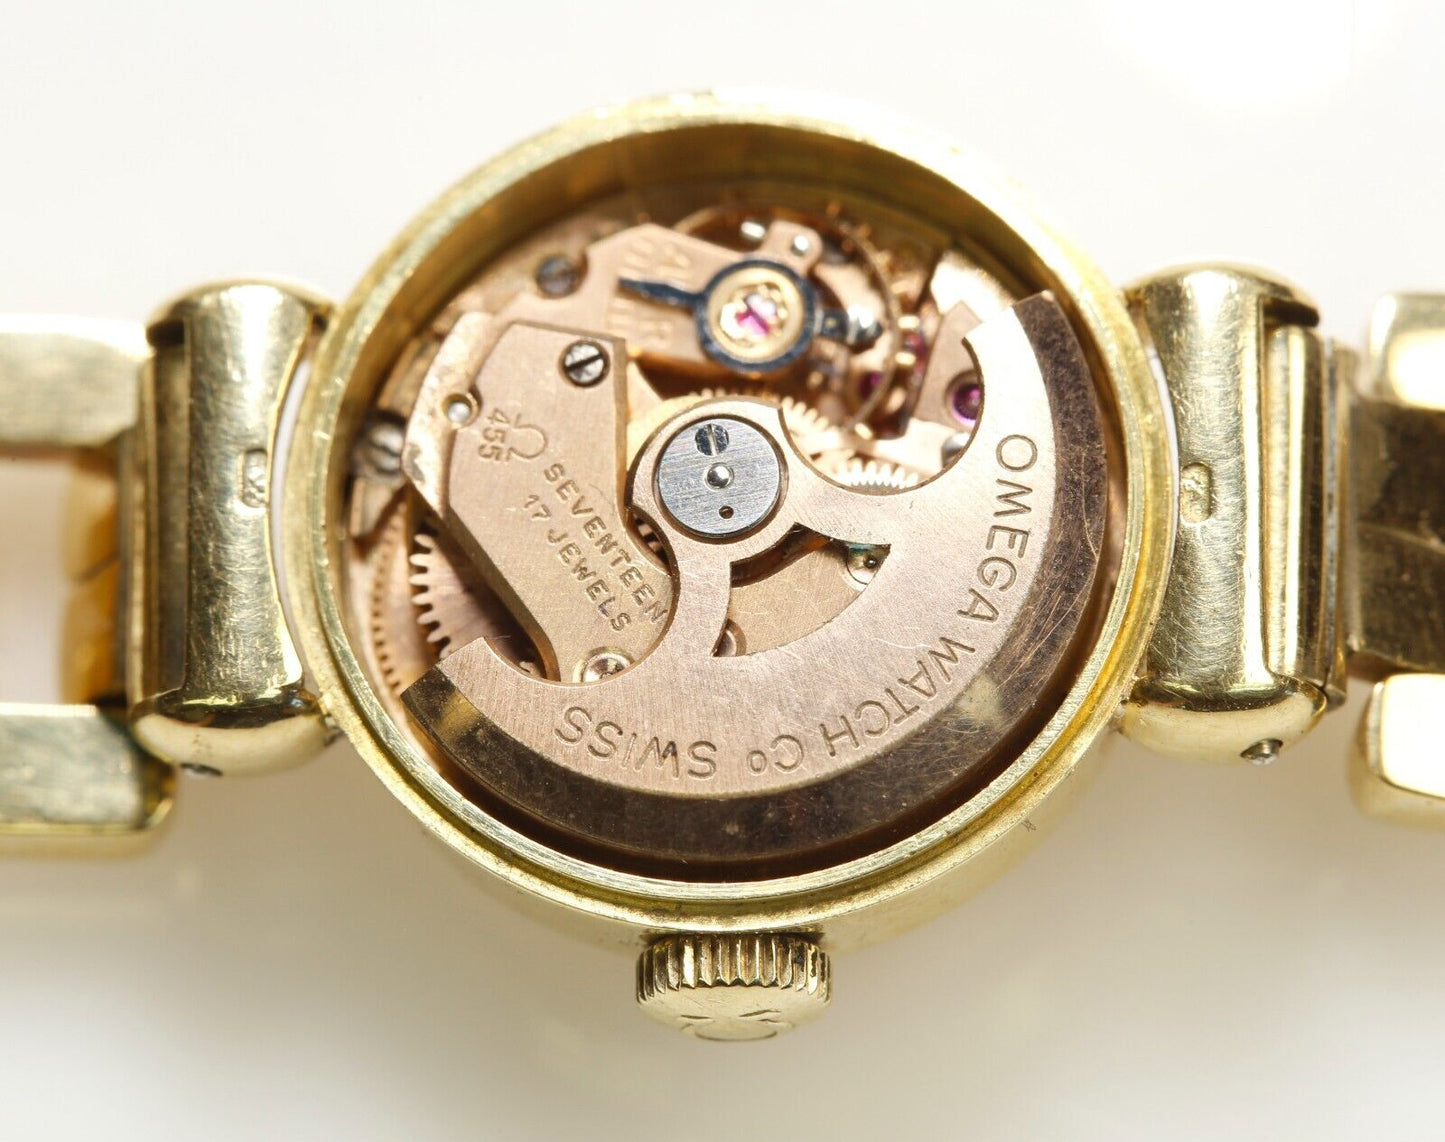 All 18K Ladies Omega Ladymatic Automatic Wristwatch 6.75”